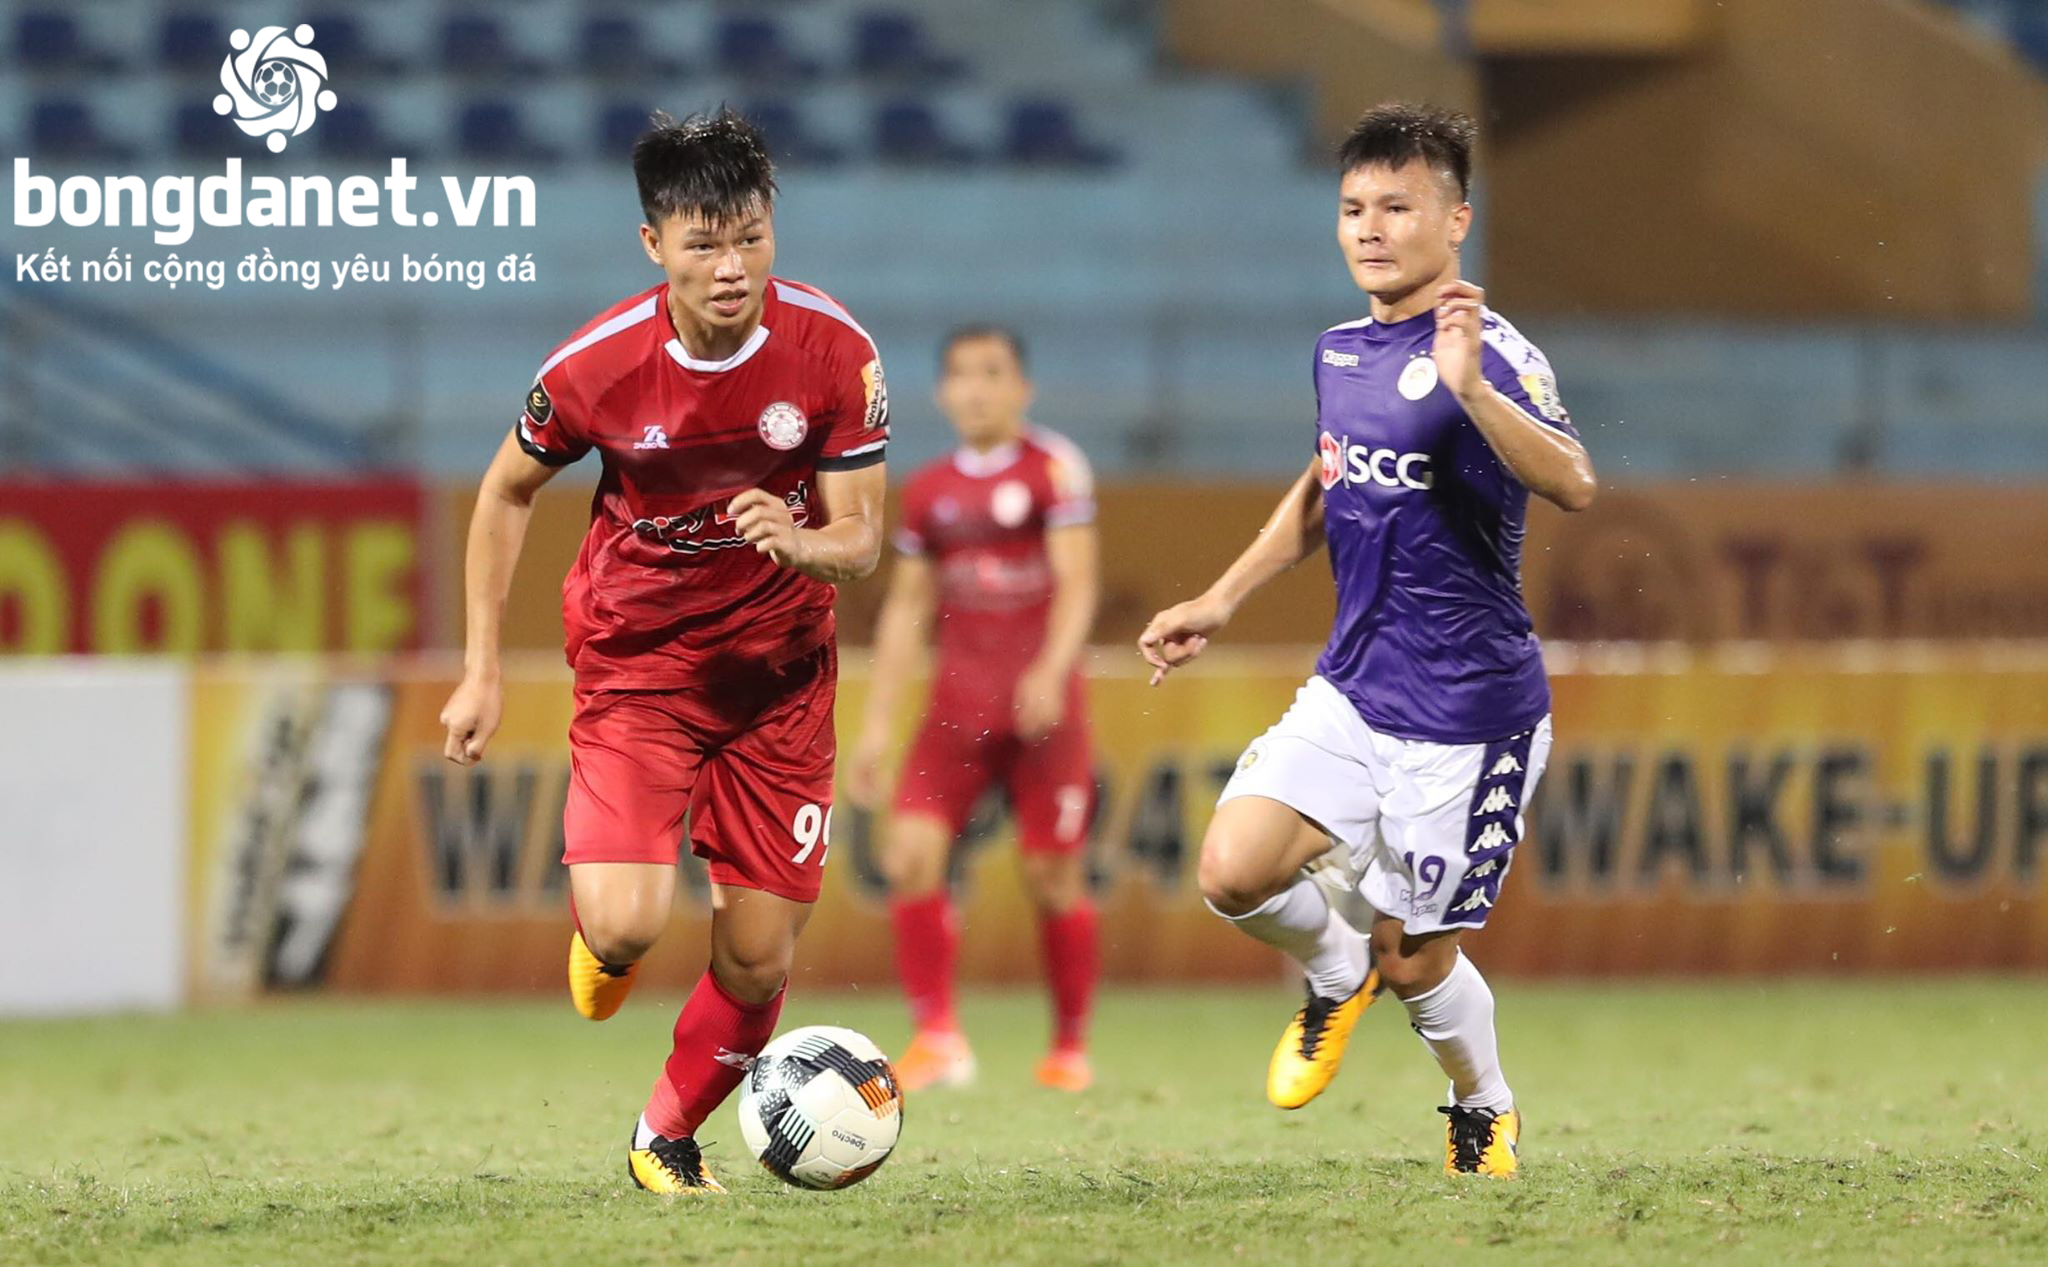 BXH - Kết quả vòng 12 V.League 2019: HAGL cầm hòa Hà Nội, Hải Phòng thua sốc